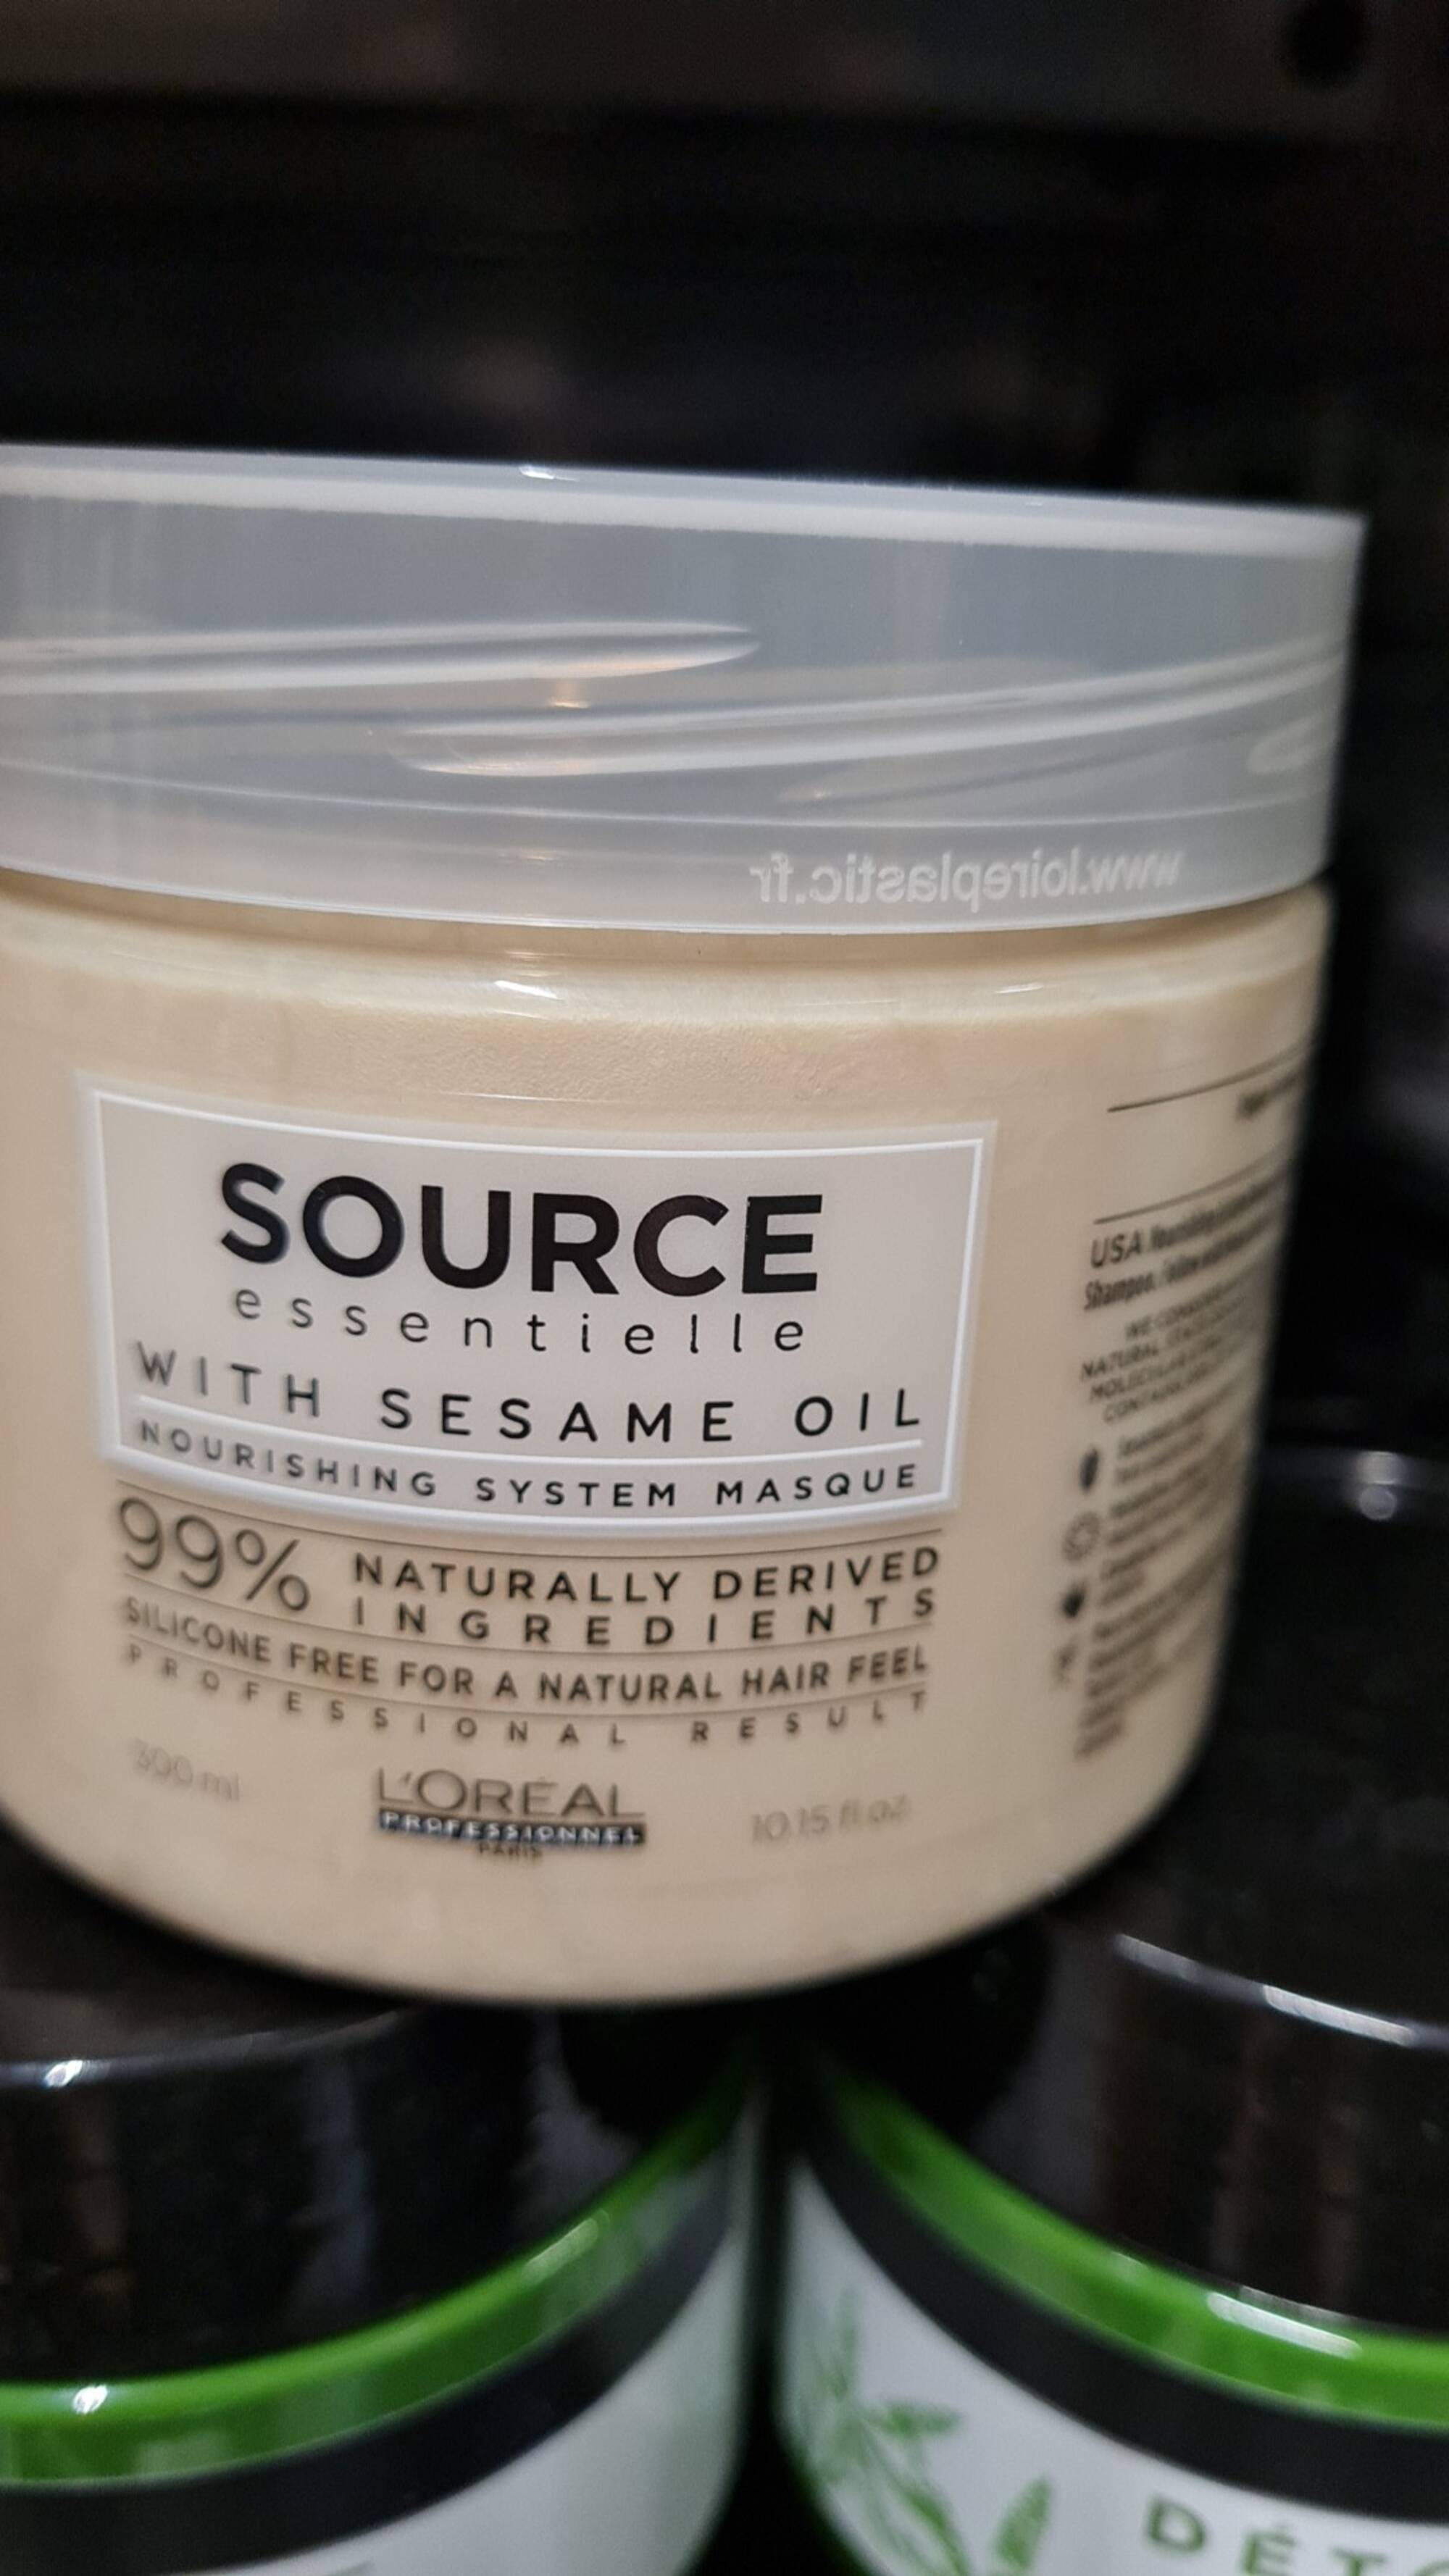 L'ORÉAL PROFESSIONNEL - Source essentielle with Sesame oil - Nourishing system masque